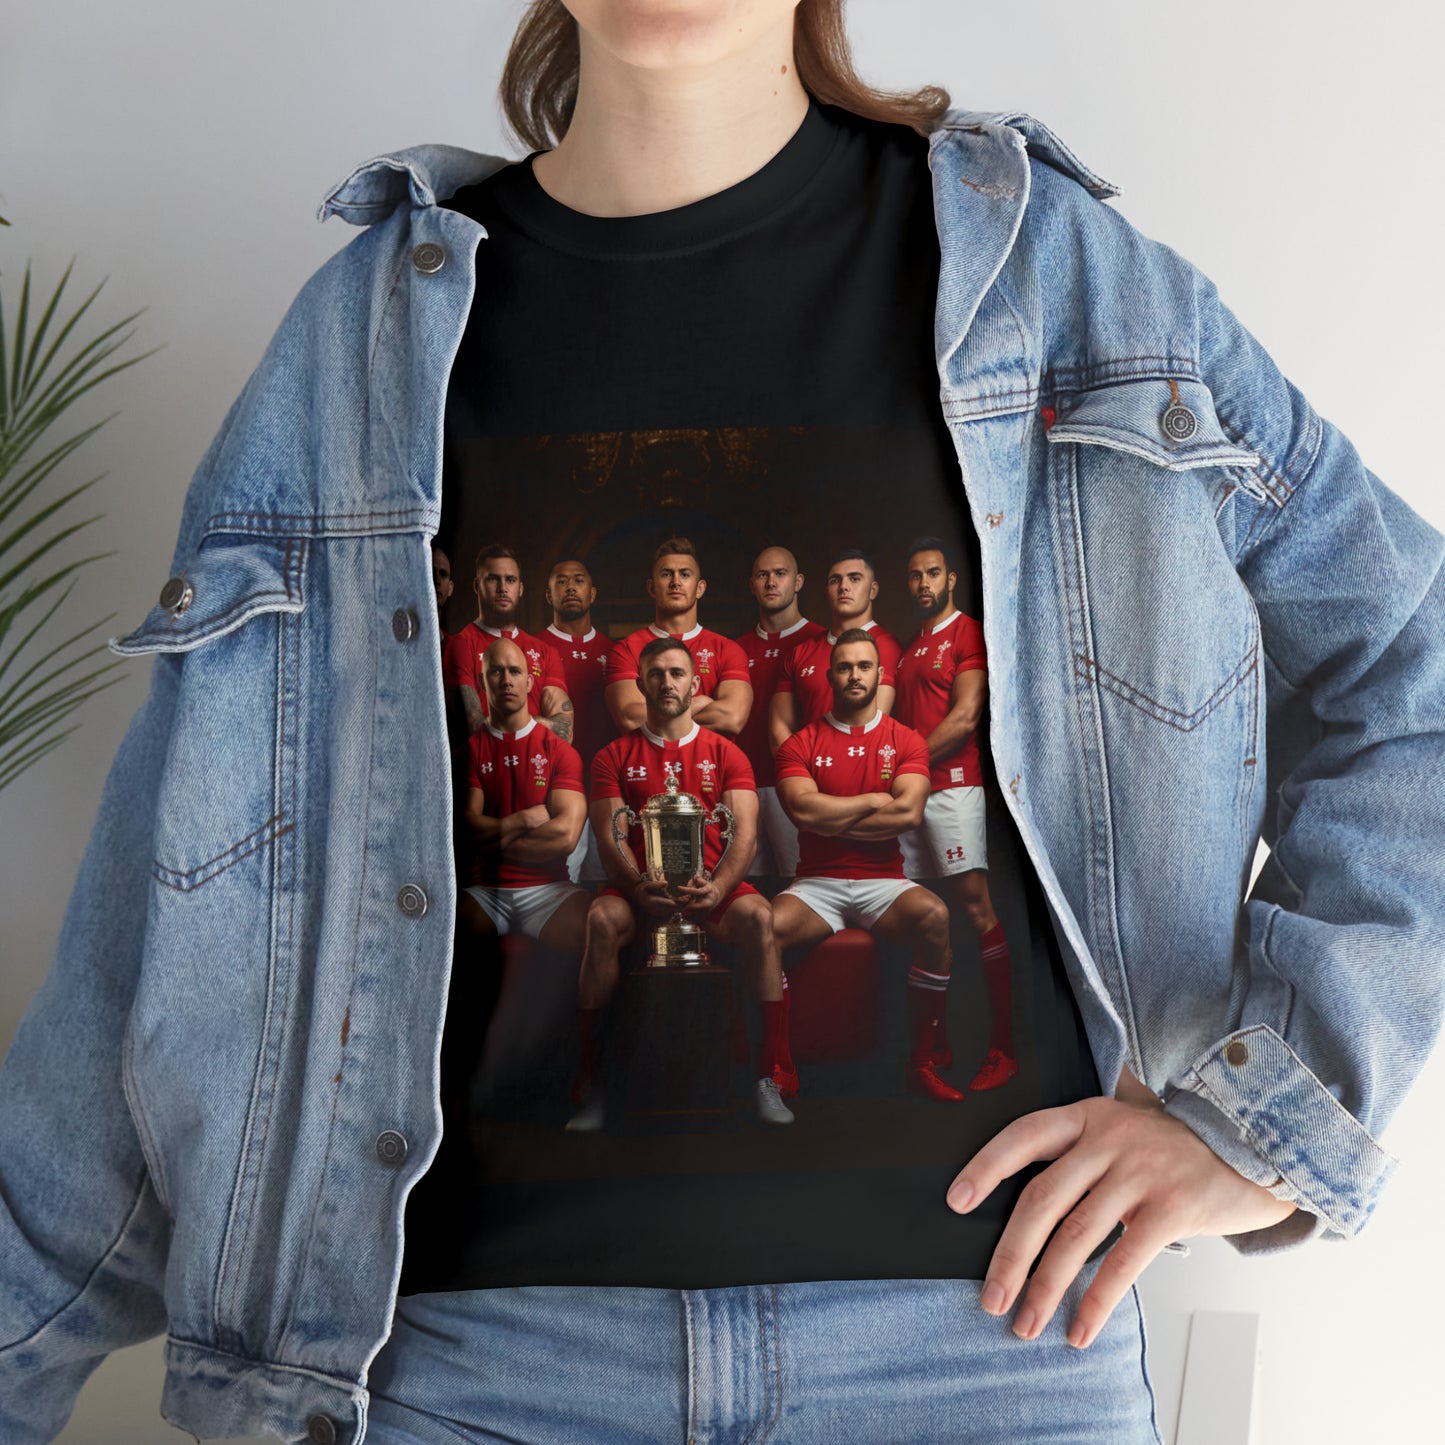 Wales RWC Photoshoot - dark shirts